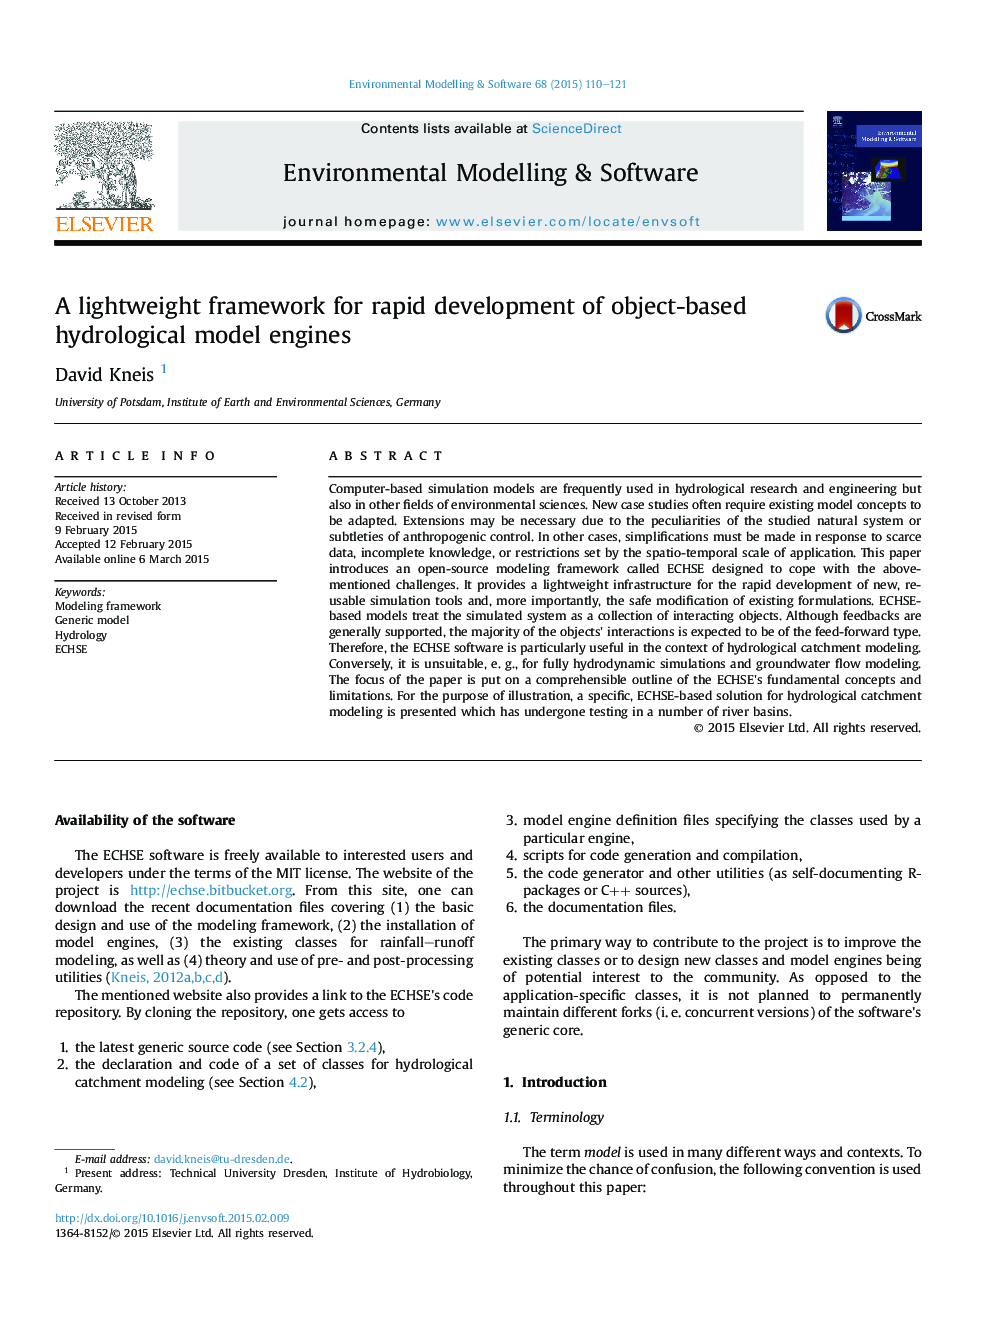 A lightweight framework for rapid development of object-based hydrological model engines